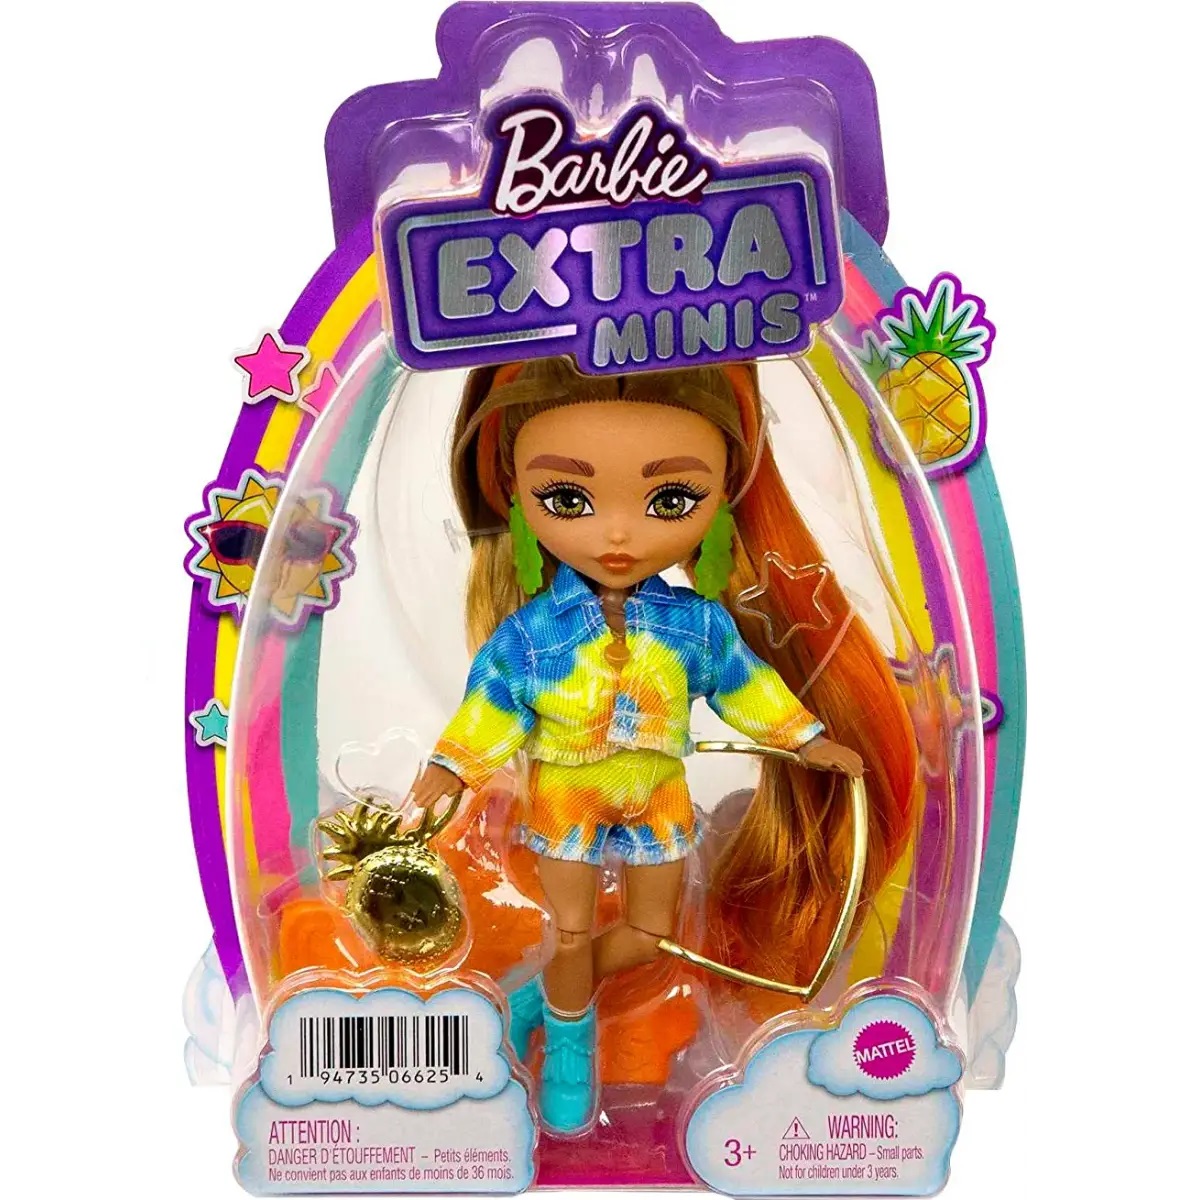 Papusa Barbie cu par lung si accesorii, Extra Minis, HHF81 accesorii imagine 2022 protejamcopilaria.ro